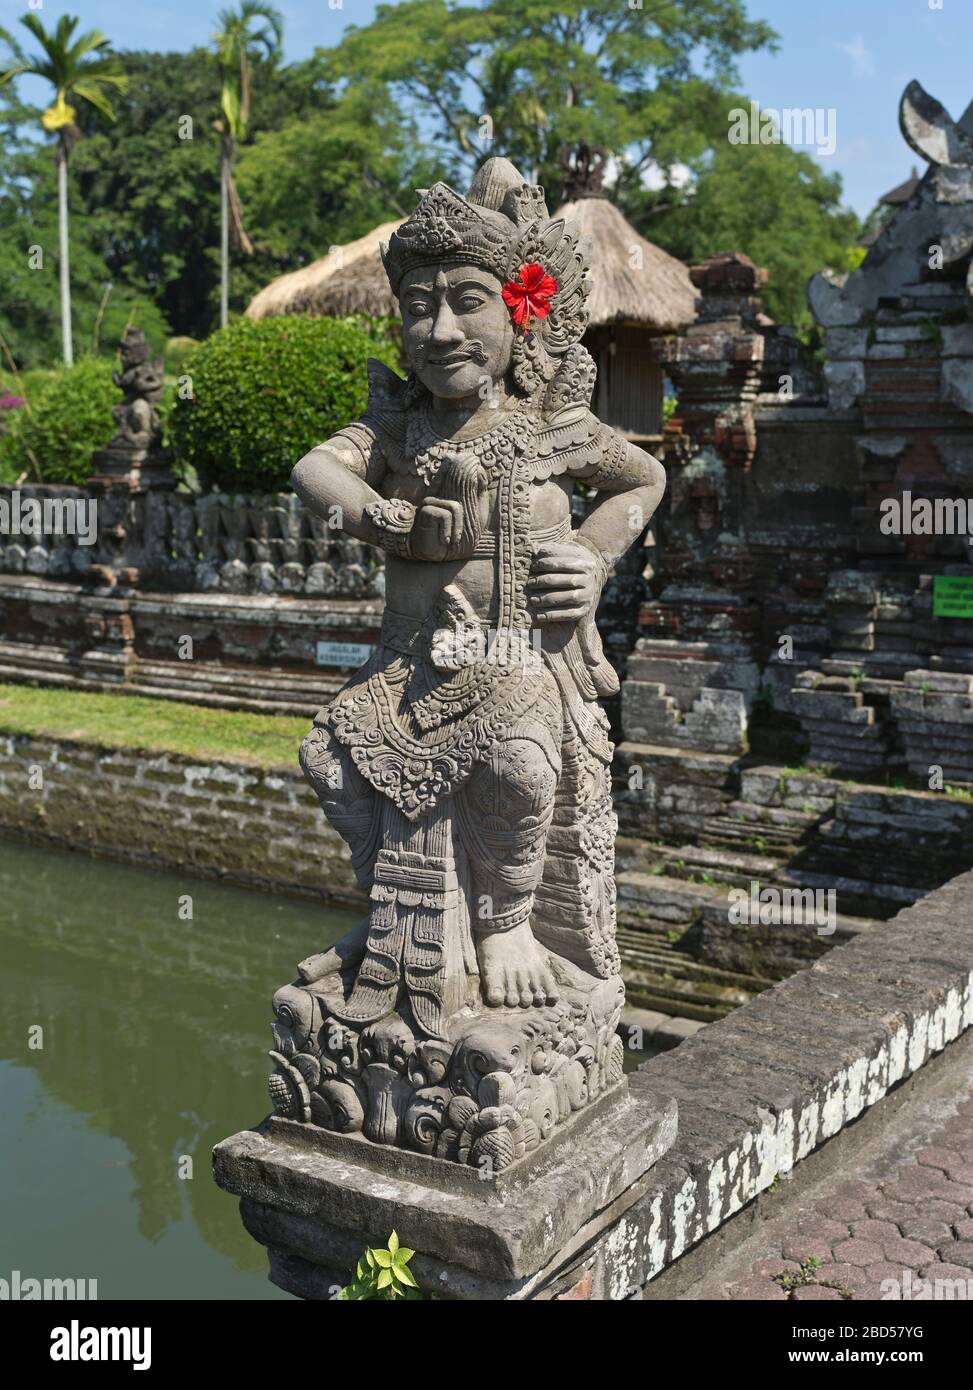 dh Pura Taman Ayun Royal Temple BALI INDONESIEN Mengwi Balinesische Statue Idol Bewachung Tempel hinduismus hindu Religion asiatisch Stockfoto